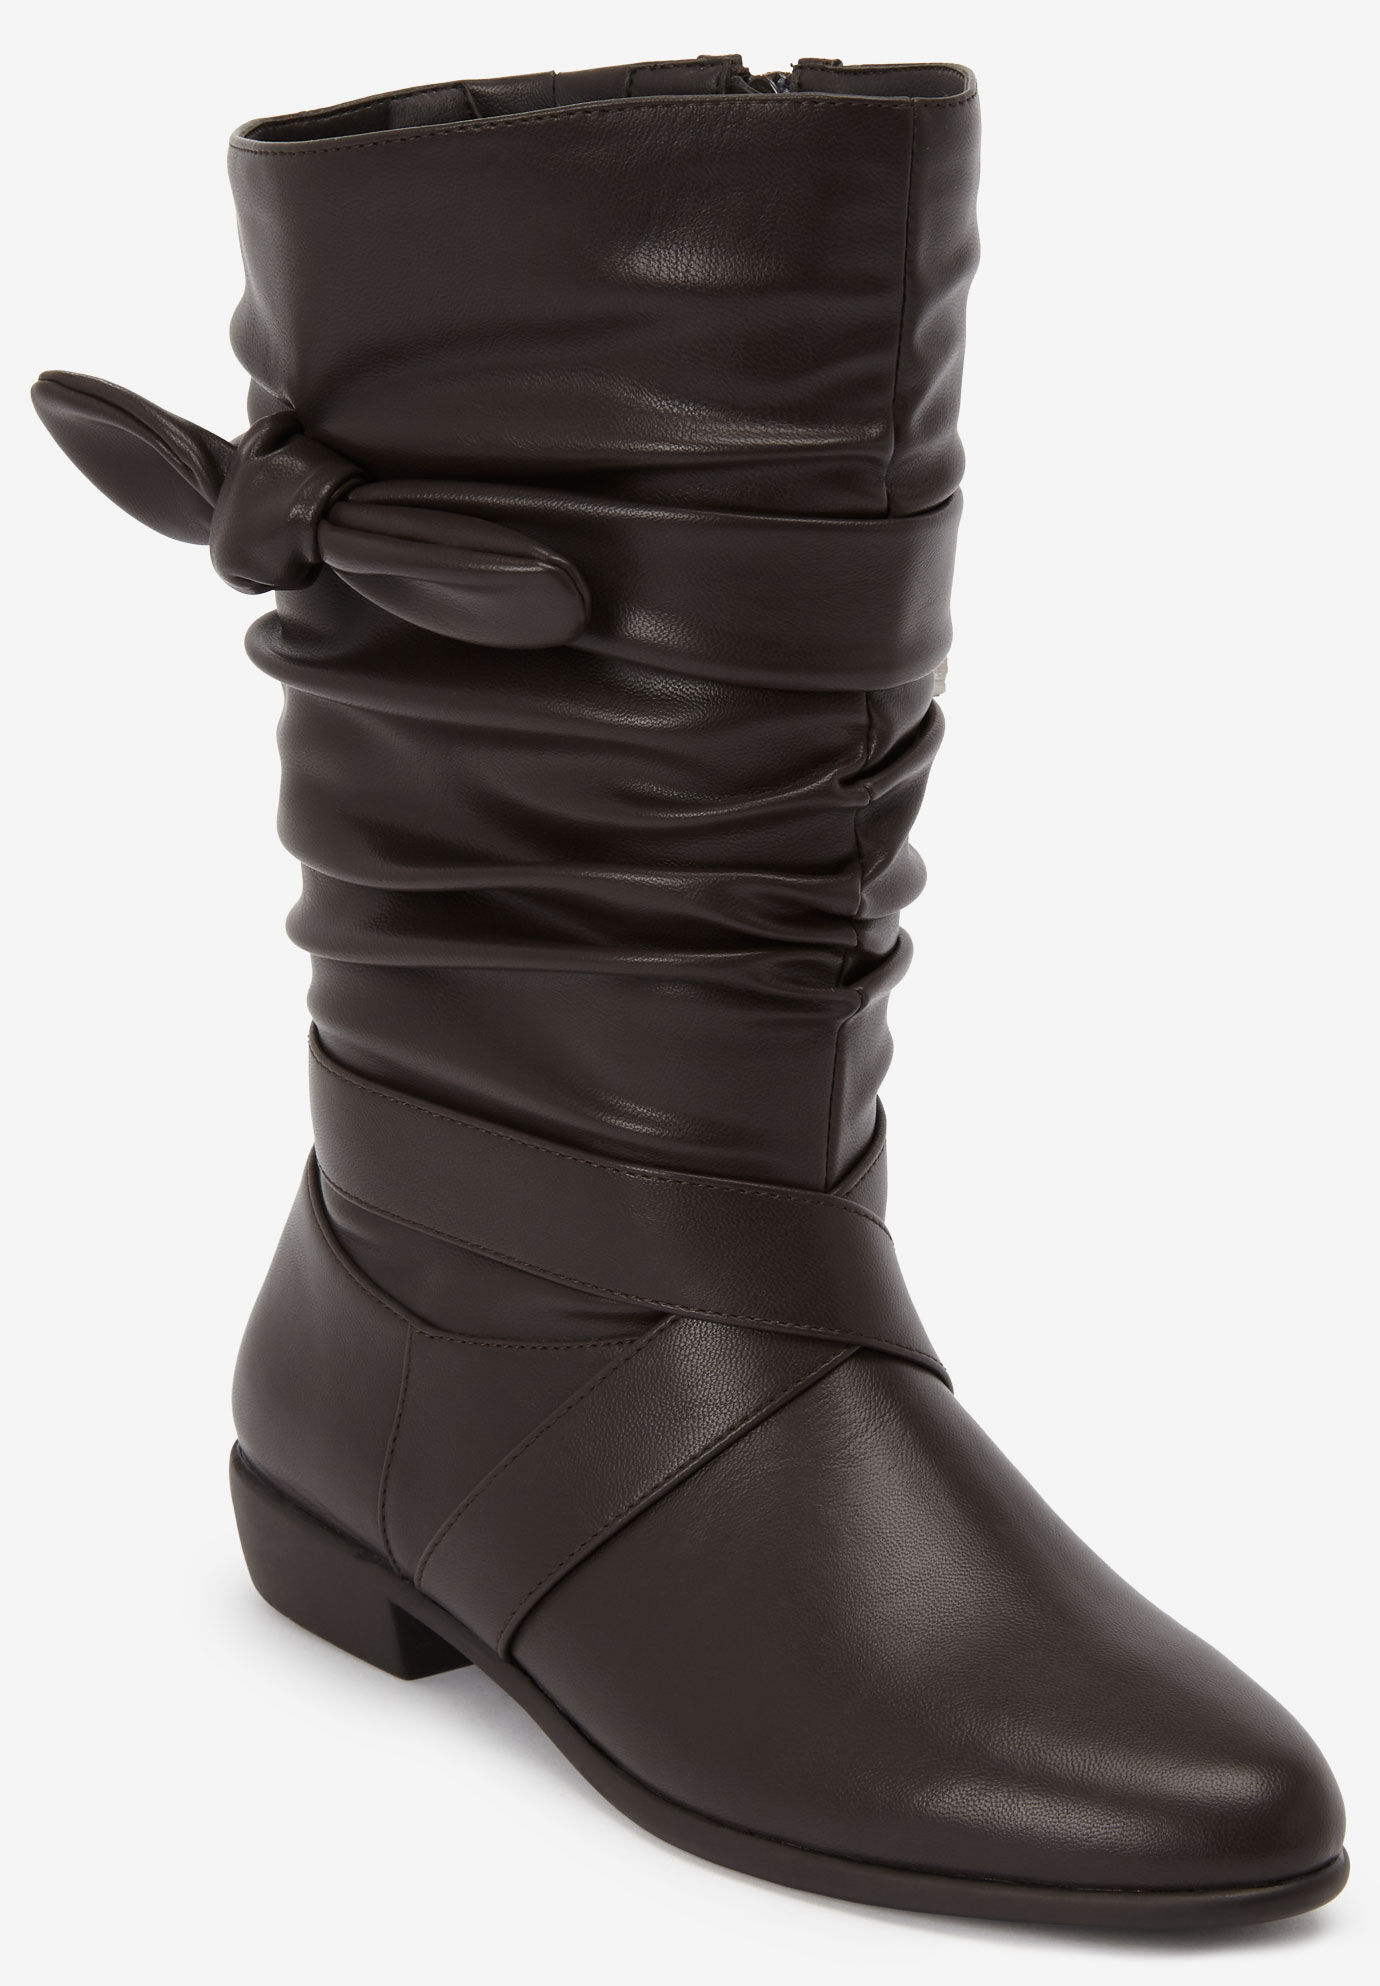 women's boots size 12 wide calf